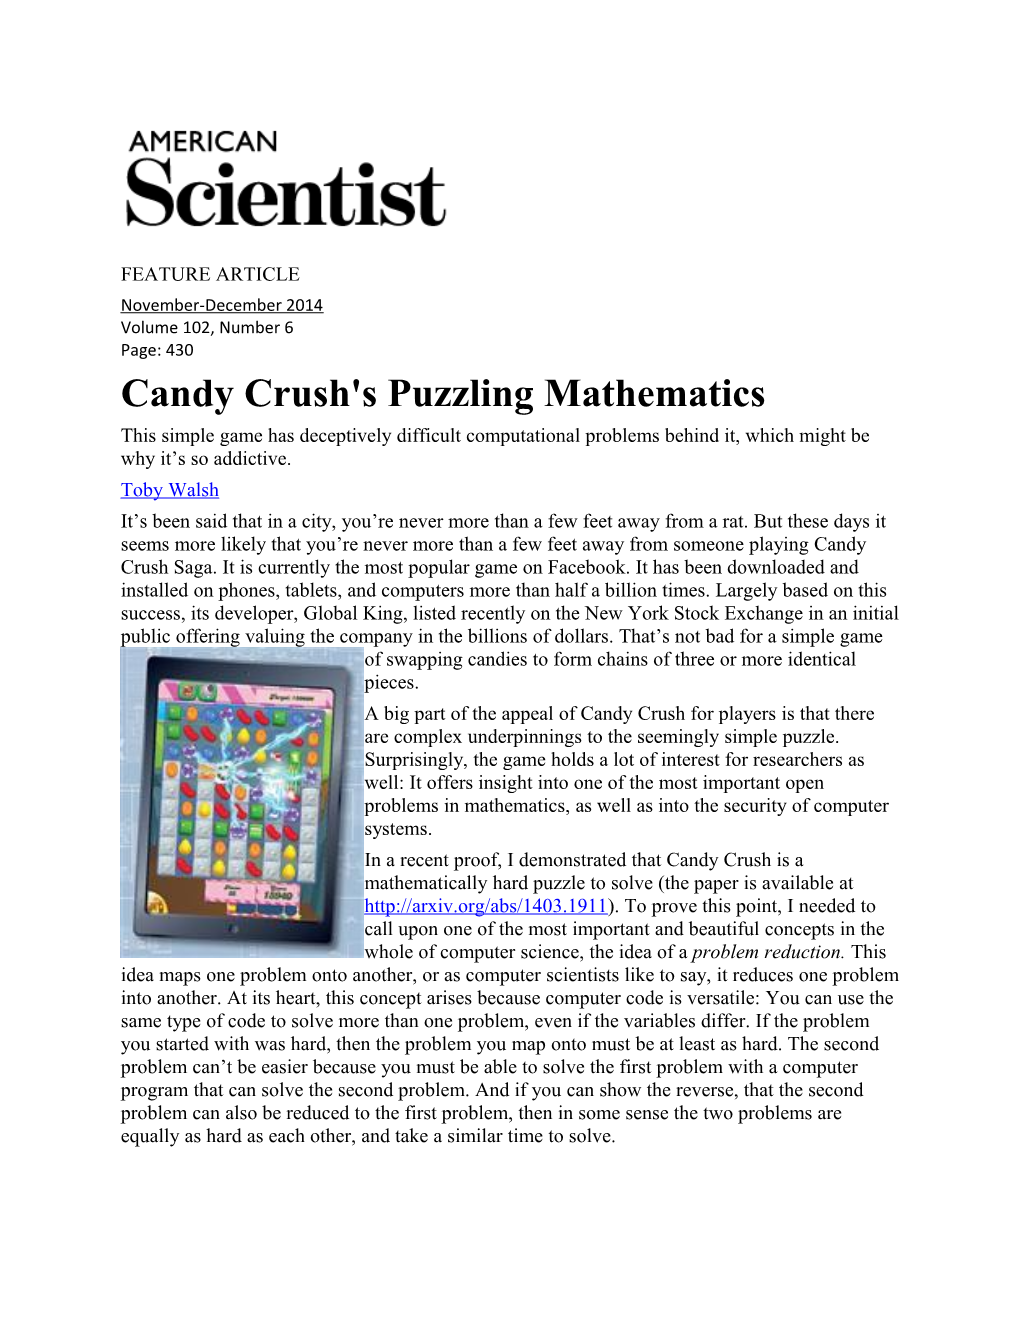 Candy Crush's Puzzling Mathematics